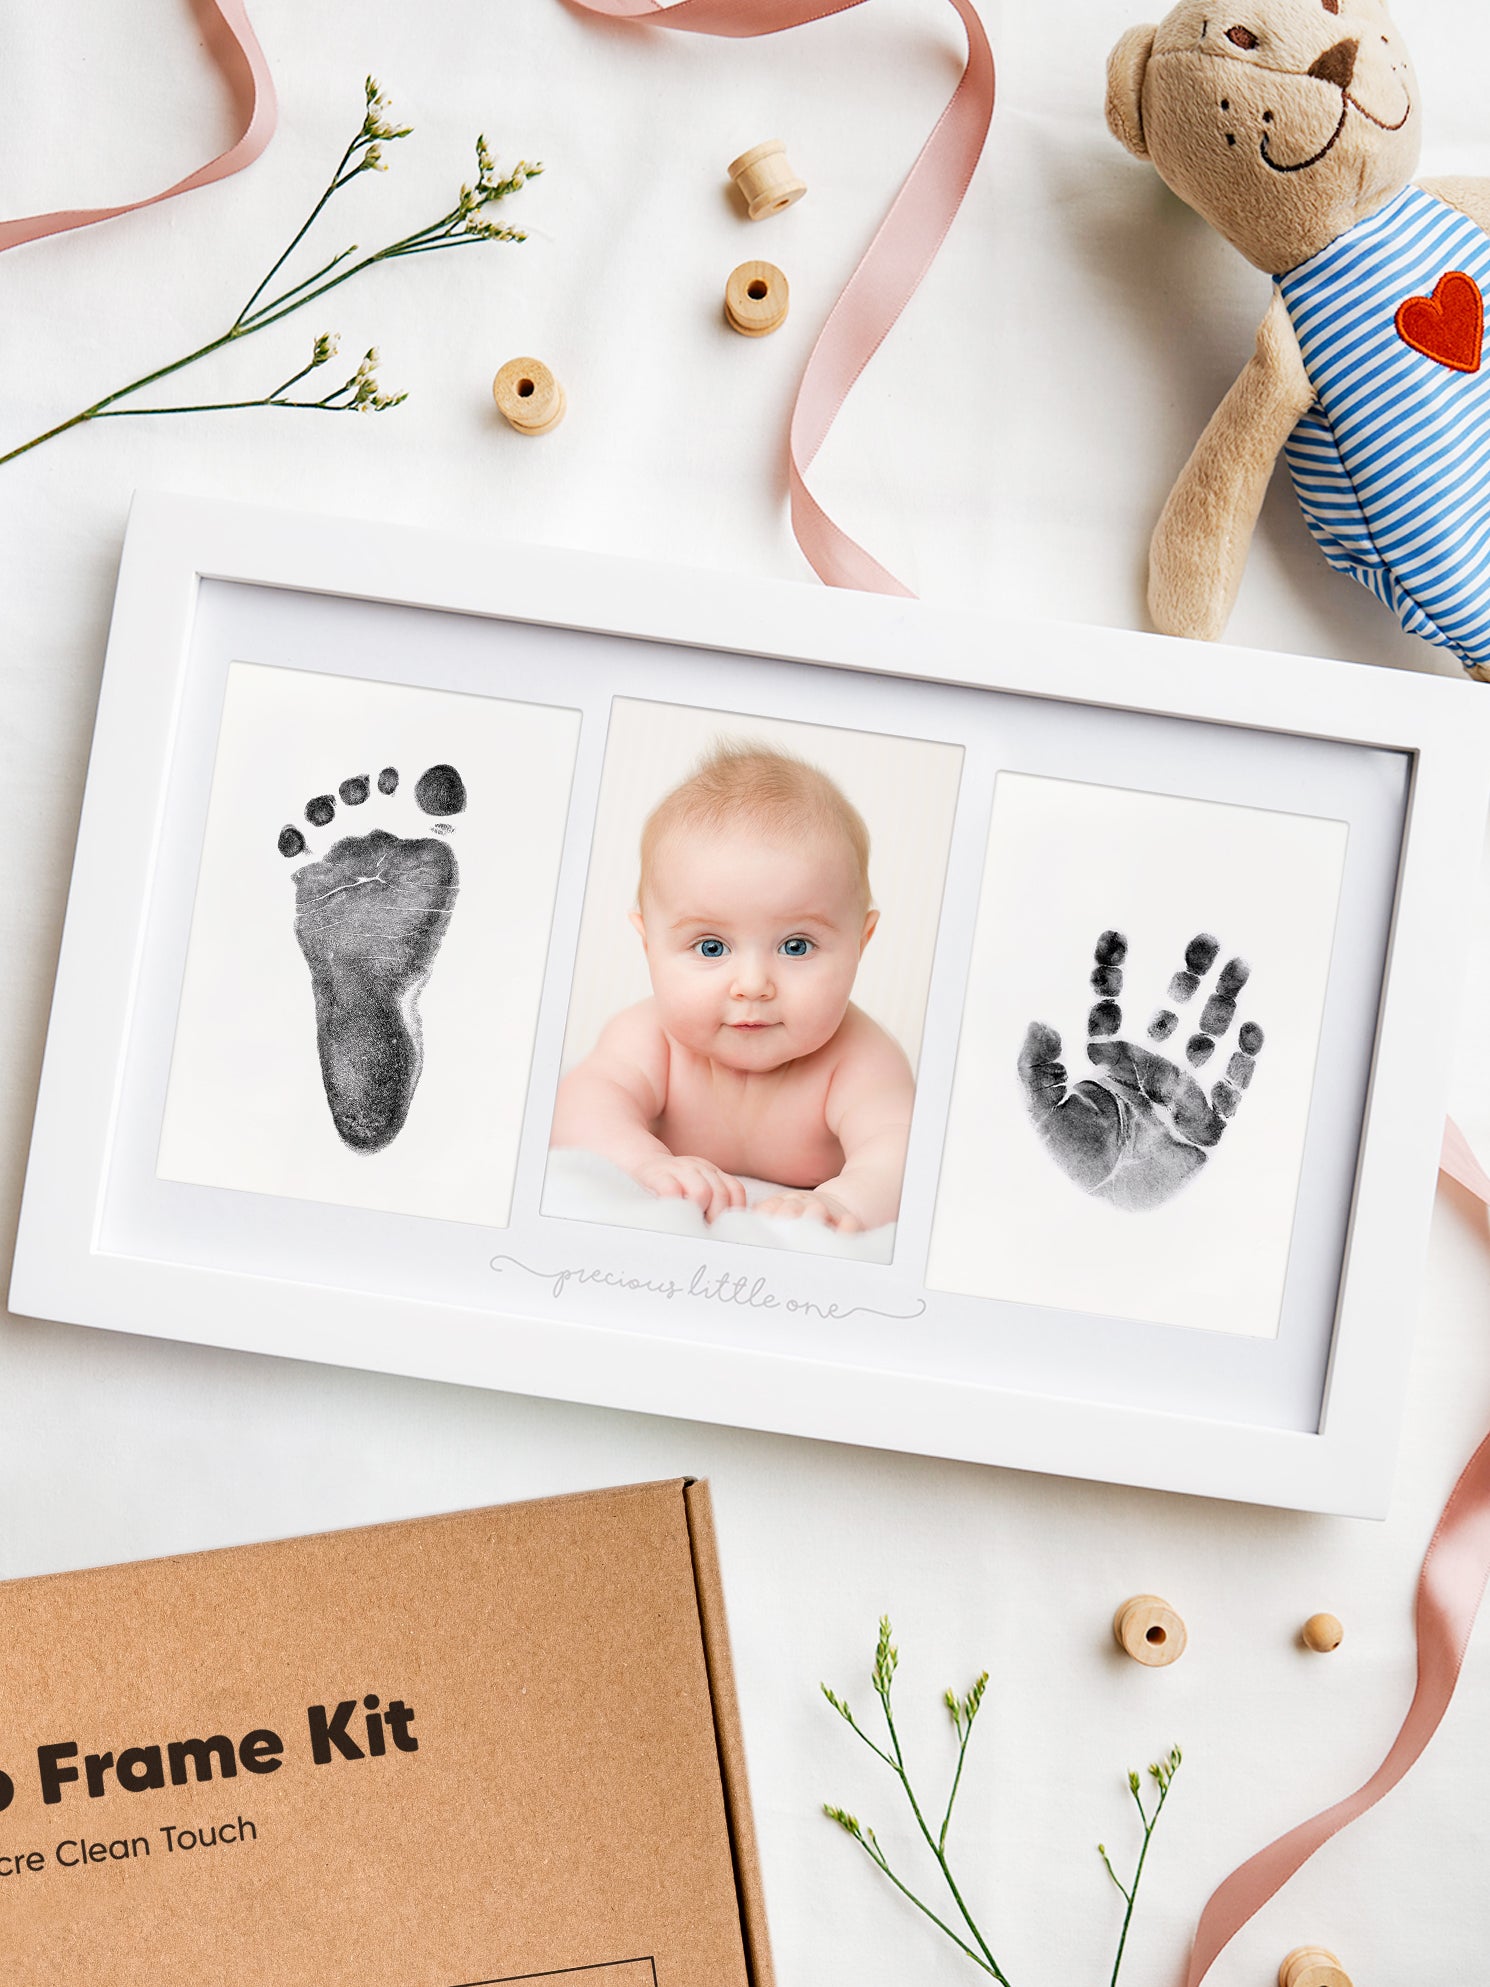 Baby Footprint Art in Stunning Pastel Shades Inkless Footprint Kit